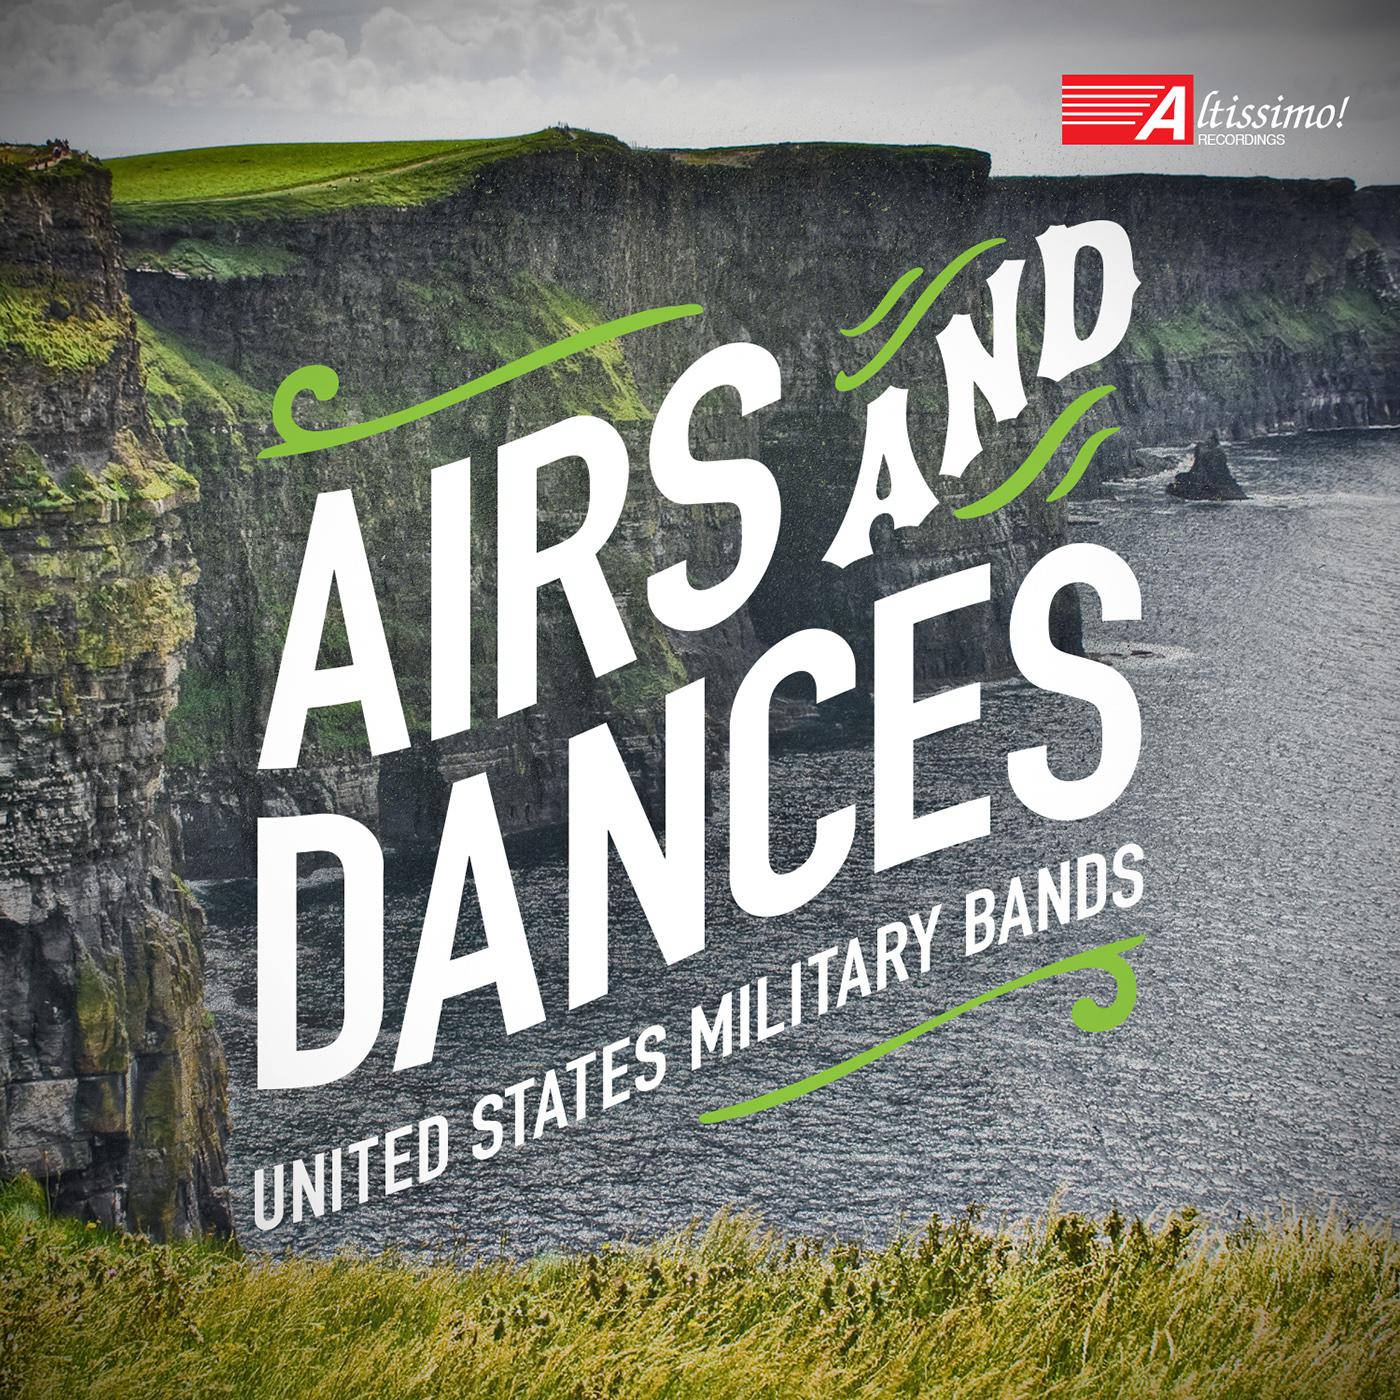 United States Air Force Band Celtic Aire - Black Velvet Band